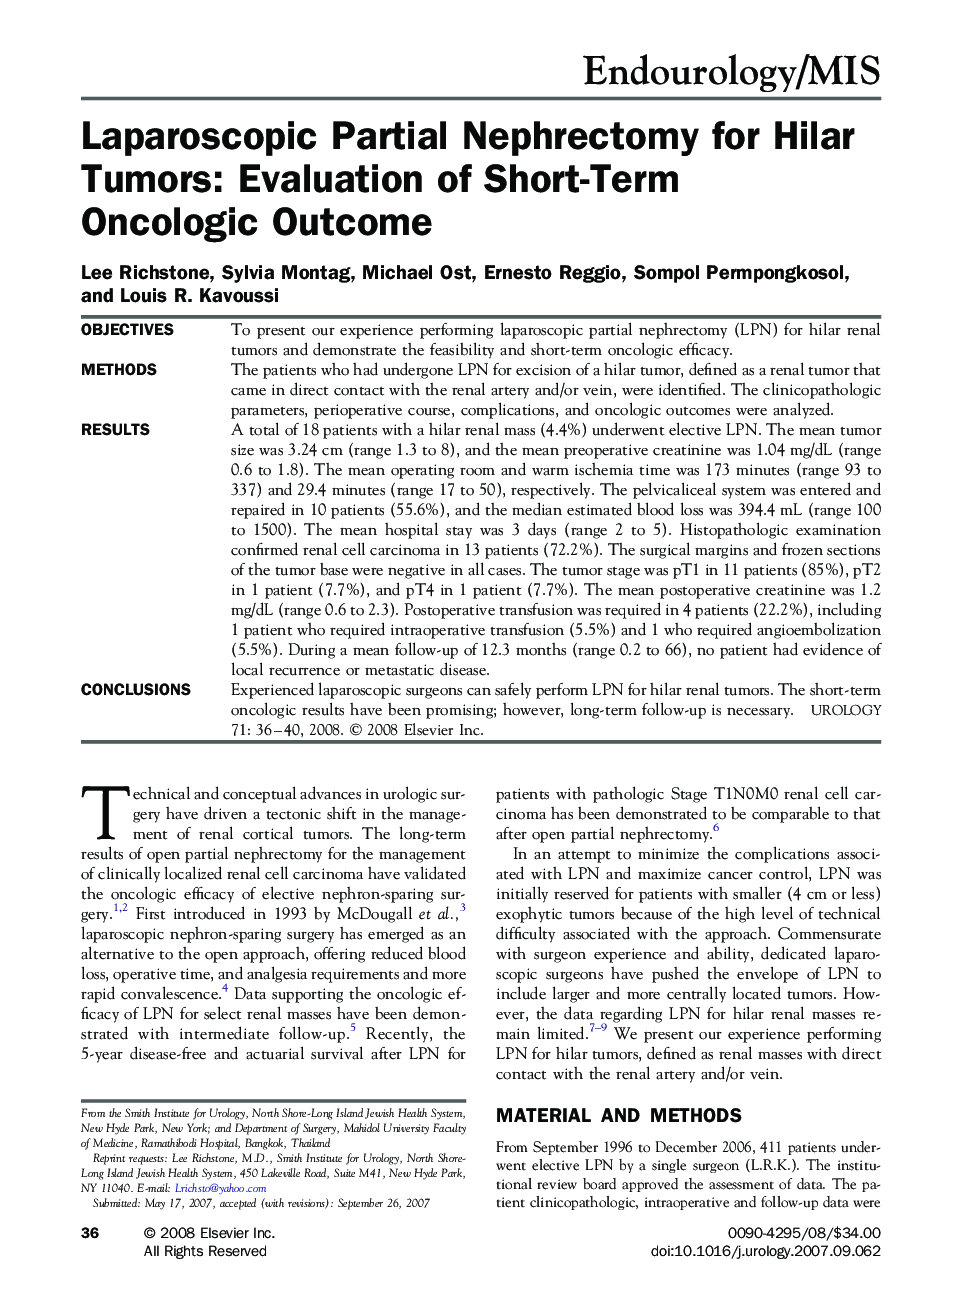 Laparoscopic Partial Nephrectomy for Hilar Tumors: Evaluation of Short-Term Oncologic Outcome